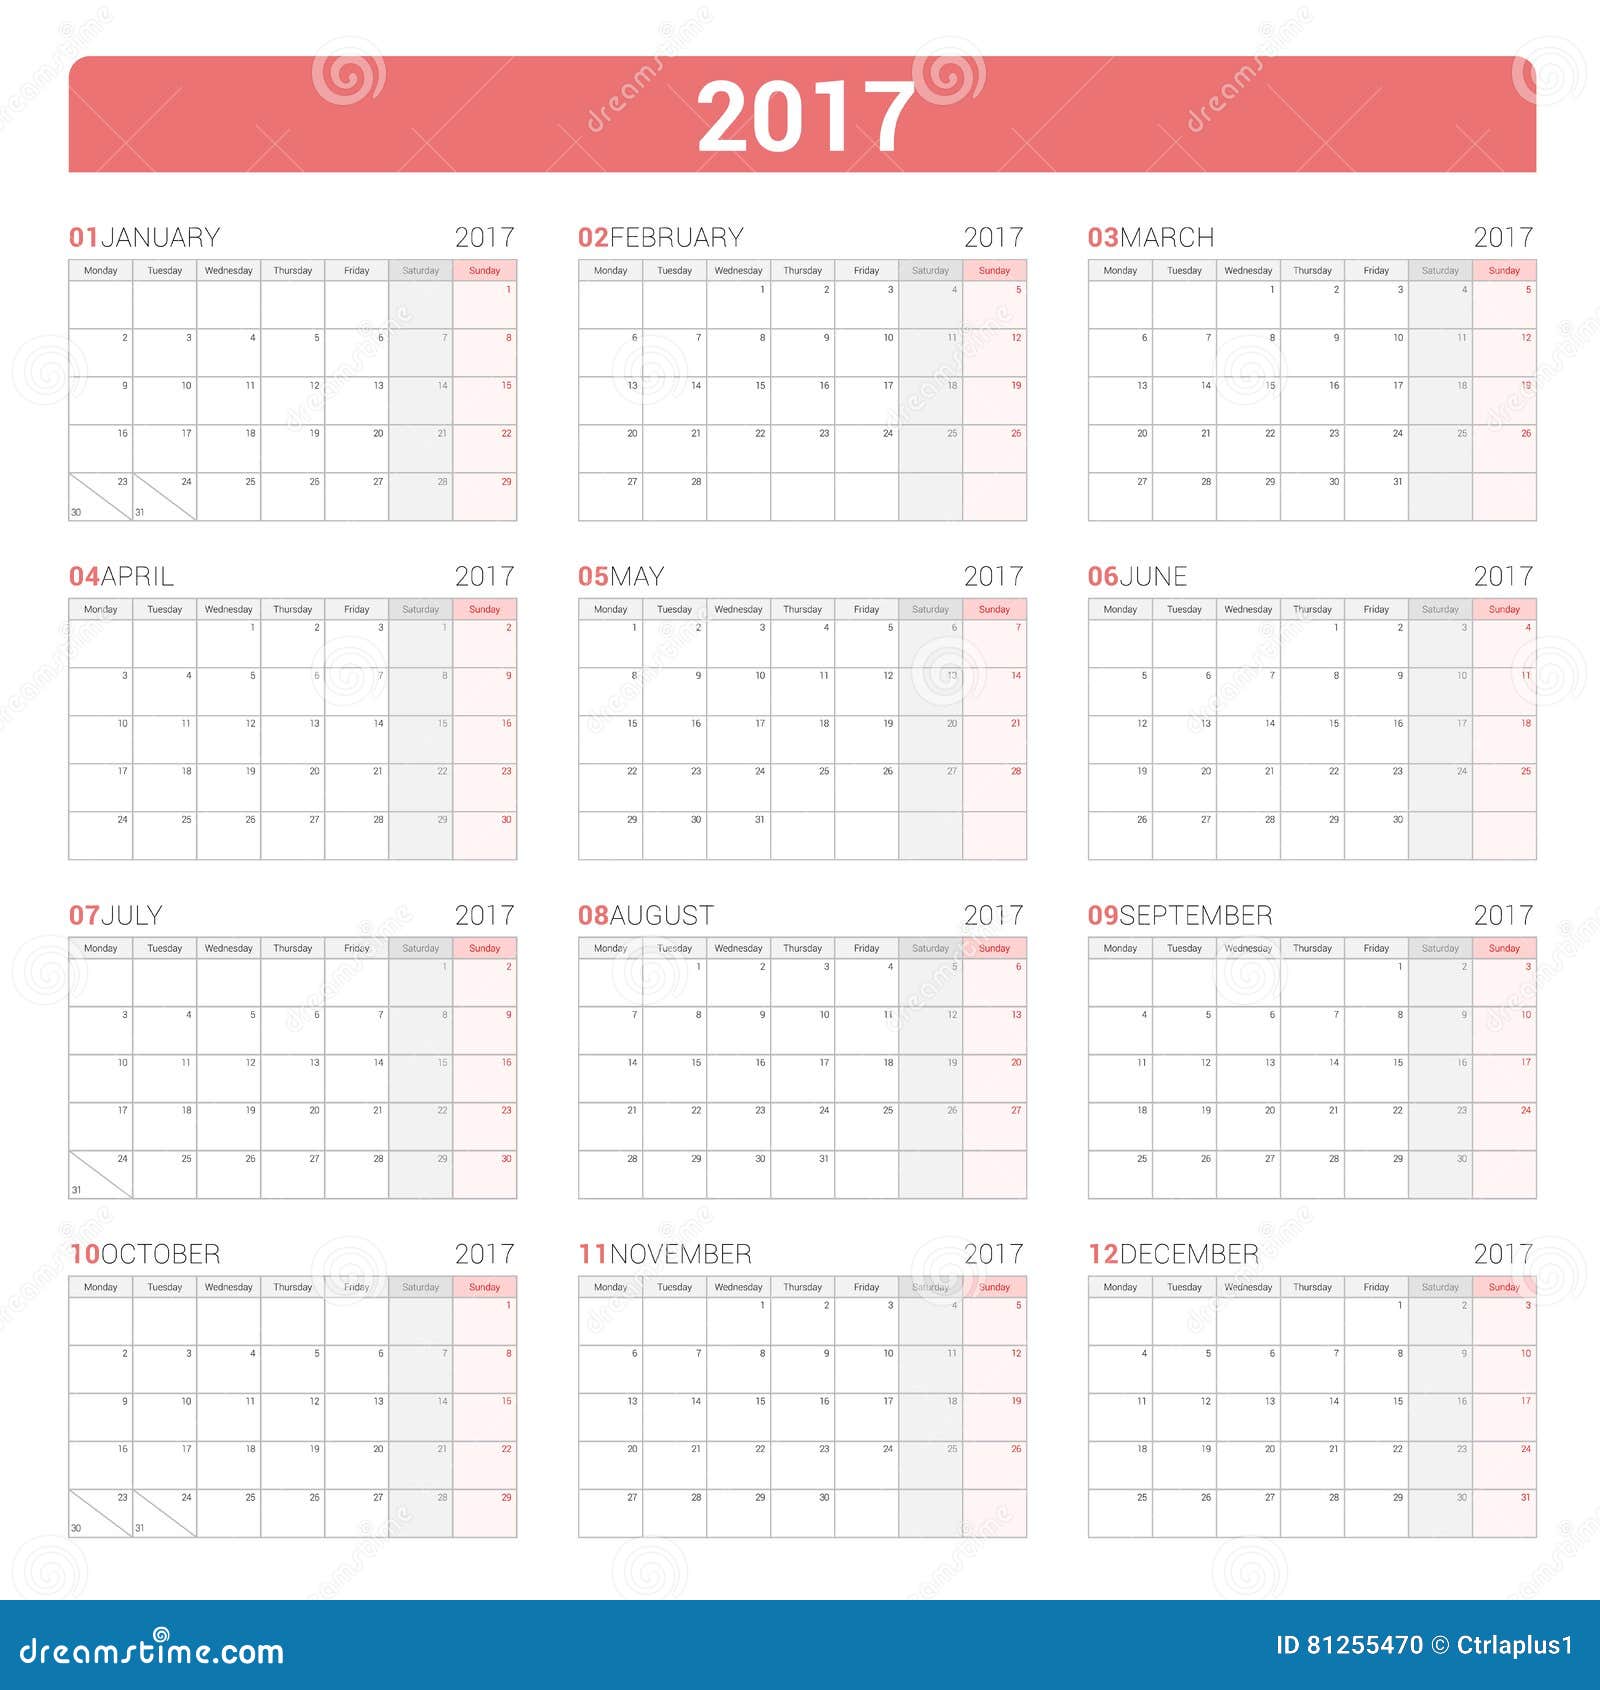 Excel Calendar 2018 (UK) - 16 free printable templates